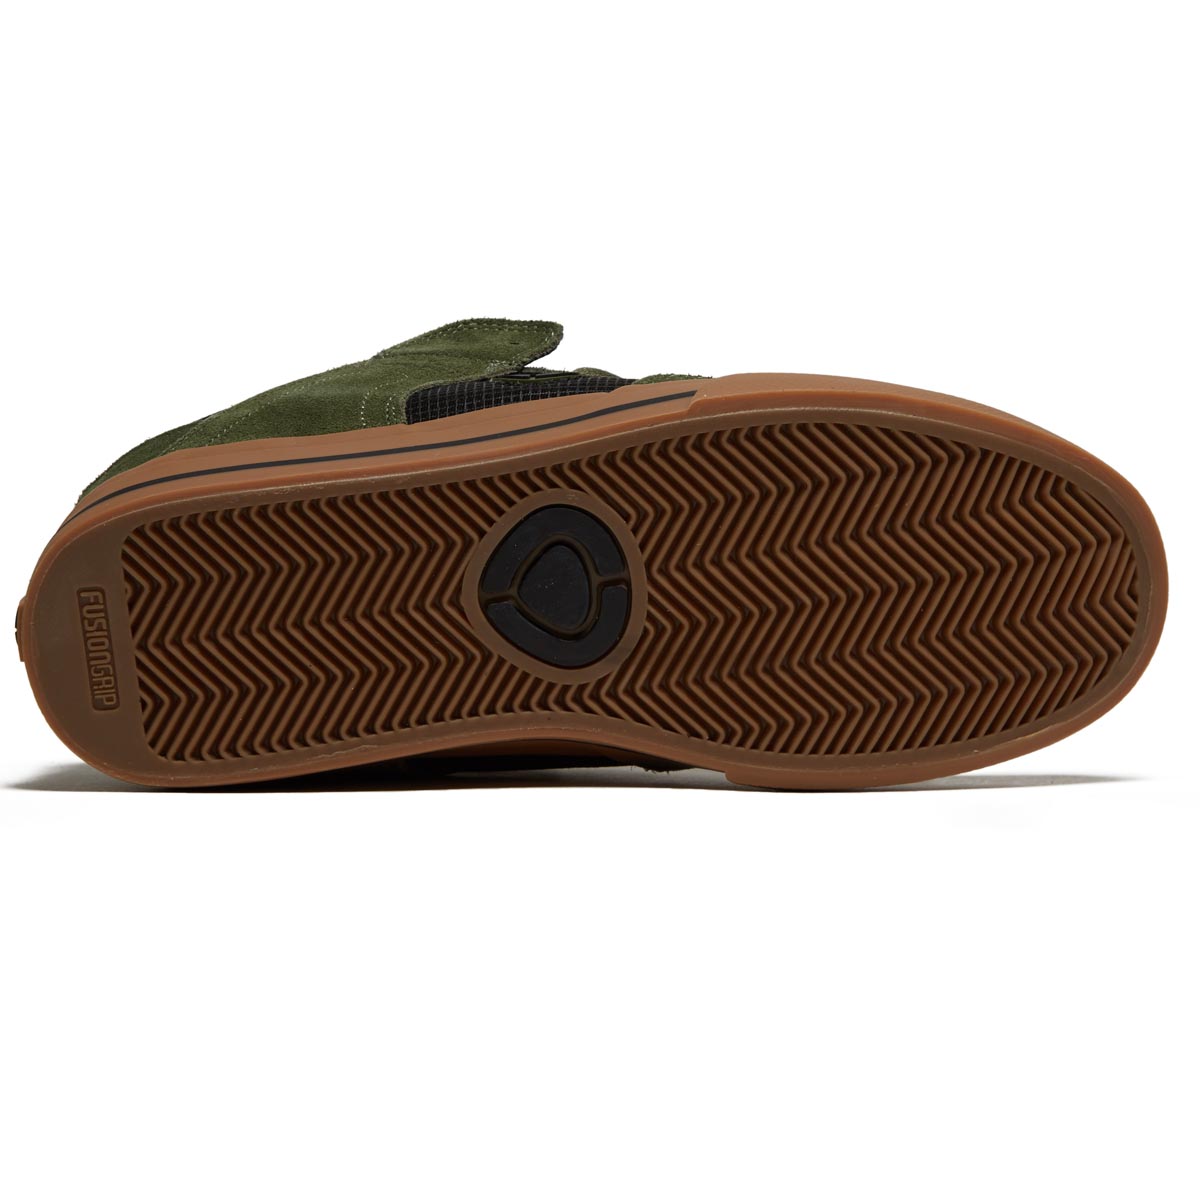 C1rca 205 Vulc Se Shoes - Black/Military Green image 4